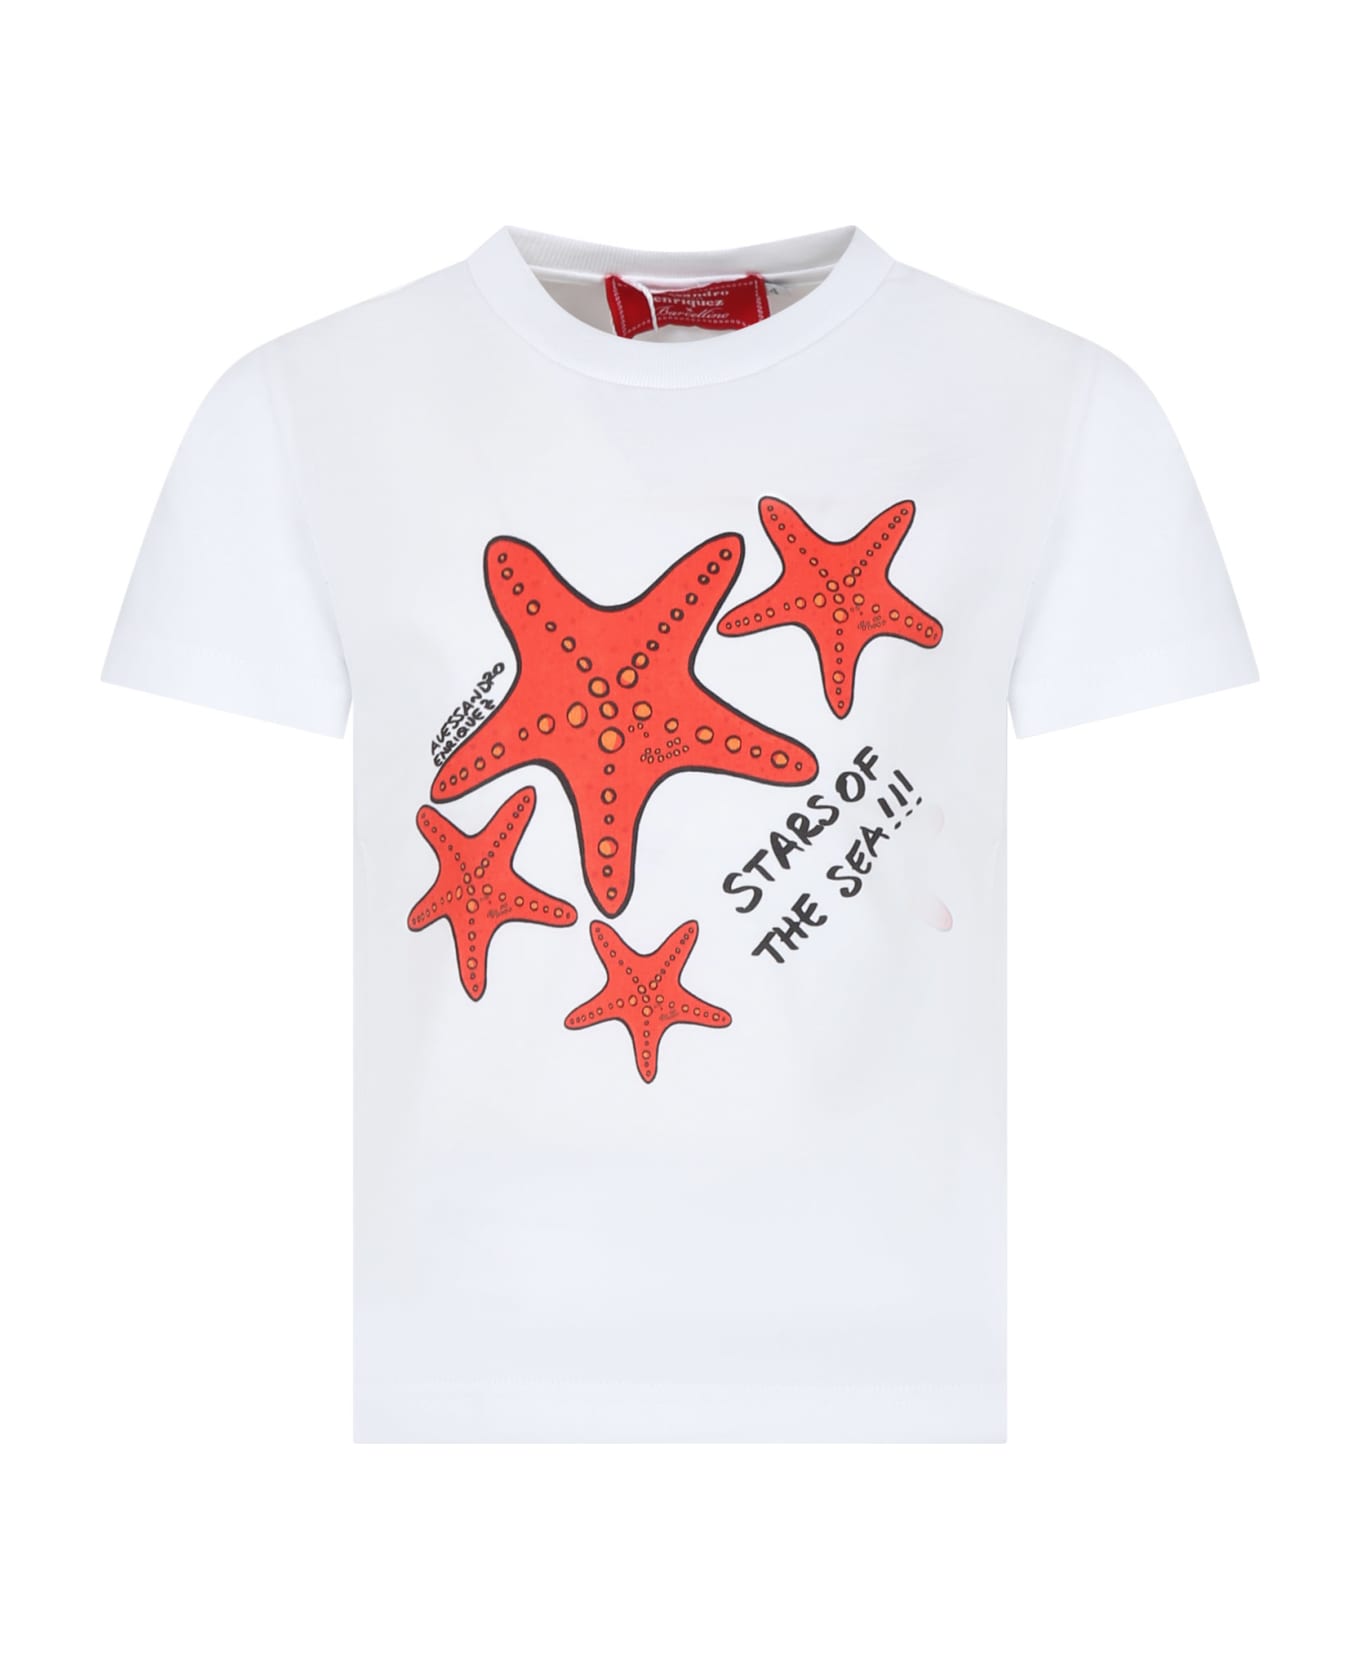 Alessandro Enriquez White T-shirt For Girl With Print Starfish - White